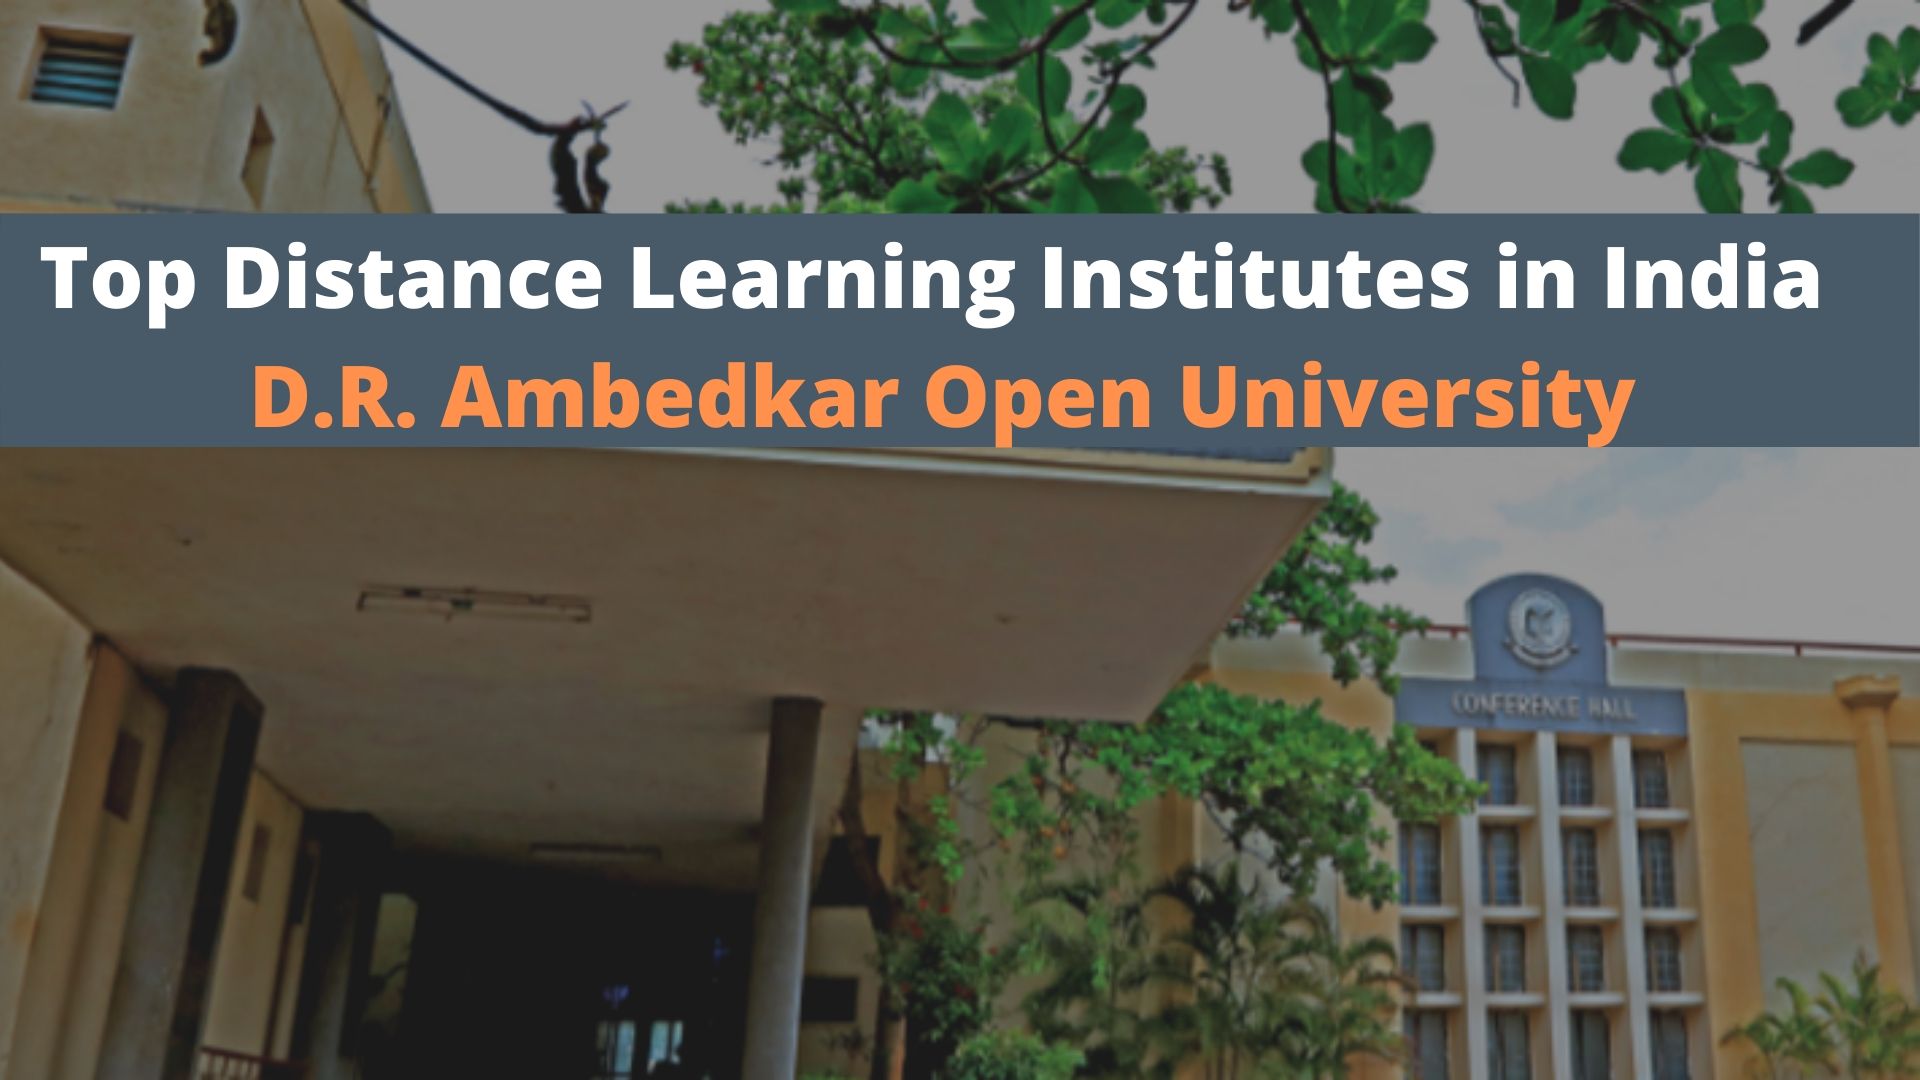 D.R. Ambedkar Open University